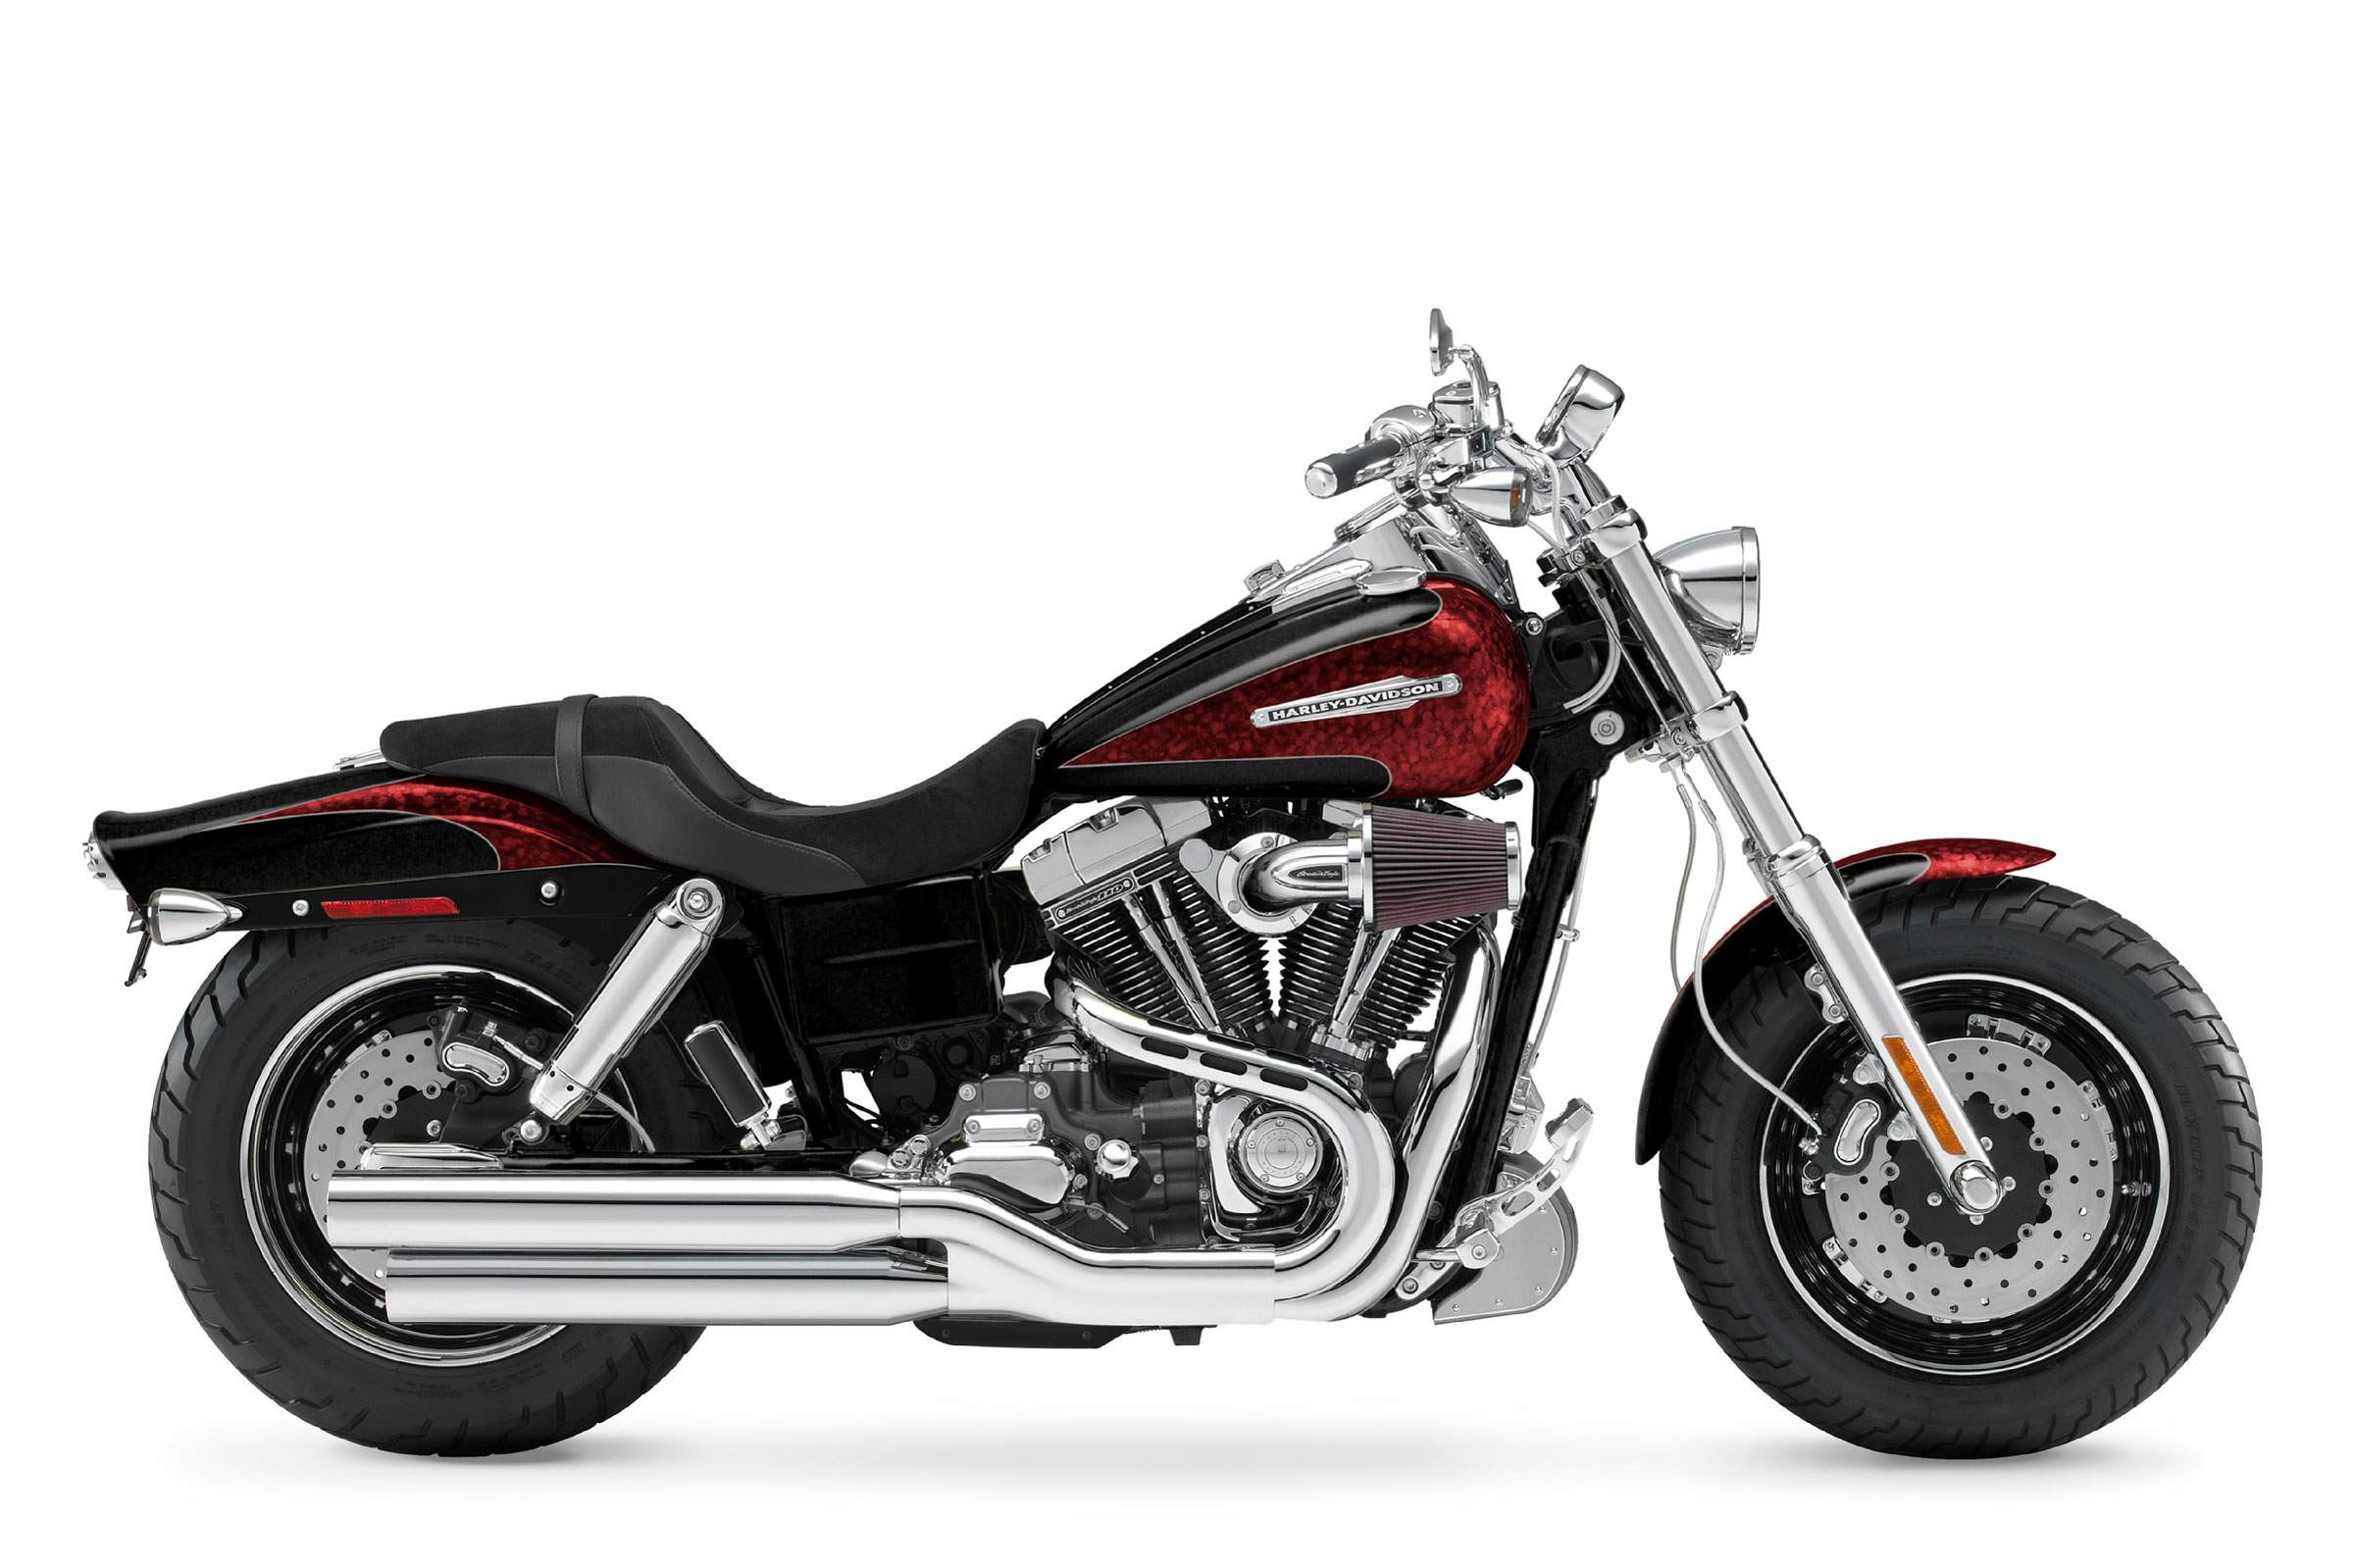 Used 2013 Harley Davidson Dyna Super Glide Custom Vivid Black Motorcycles In Dubuque Ia 334575